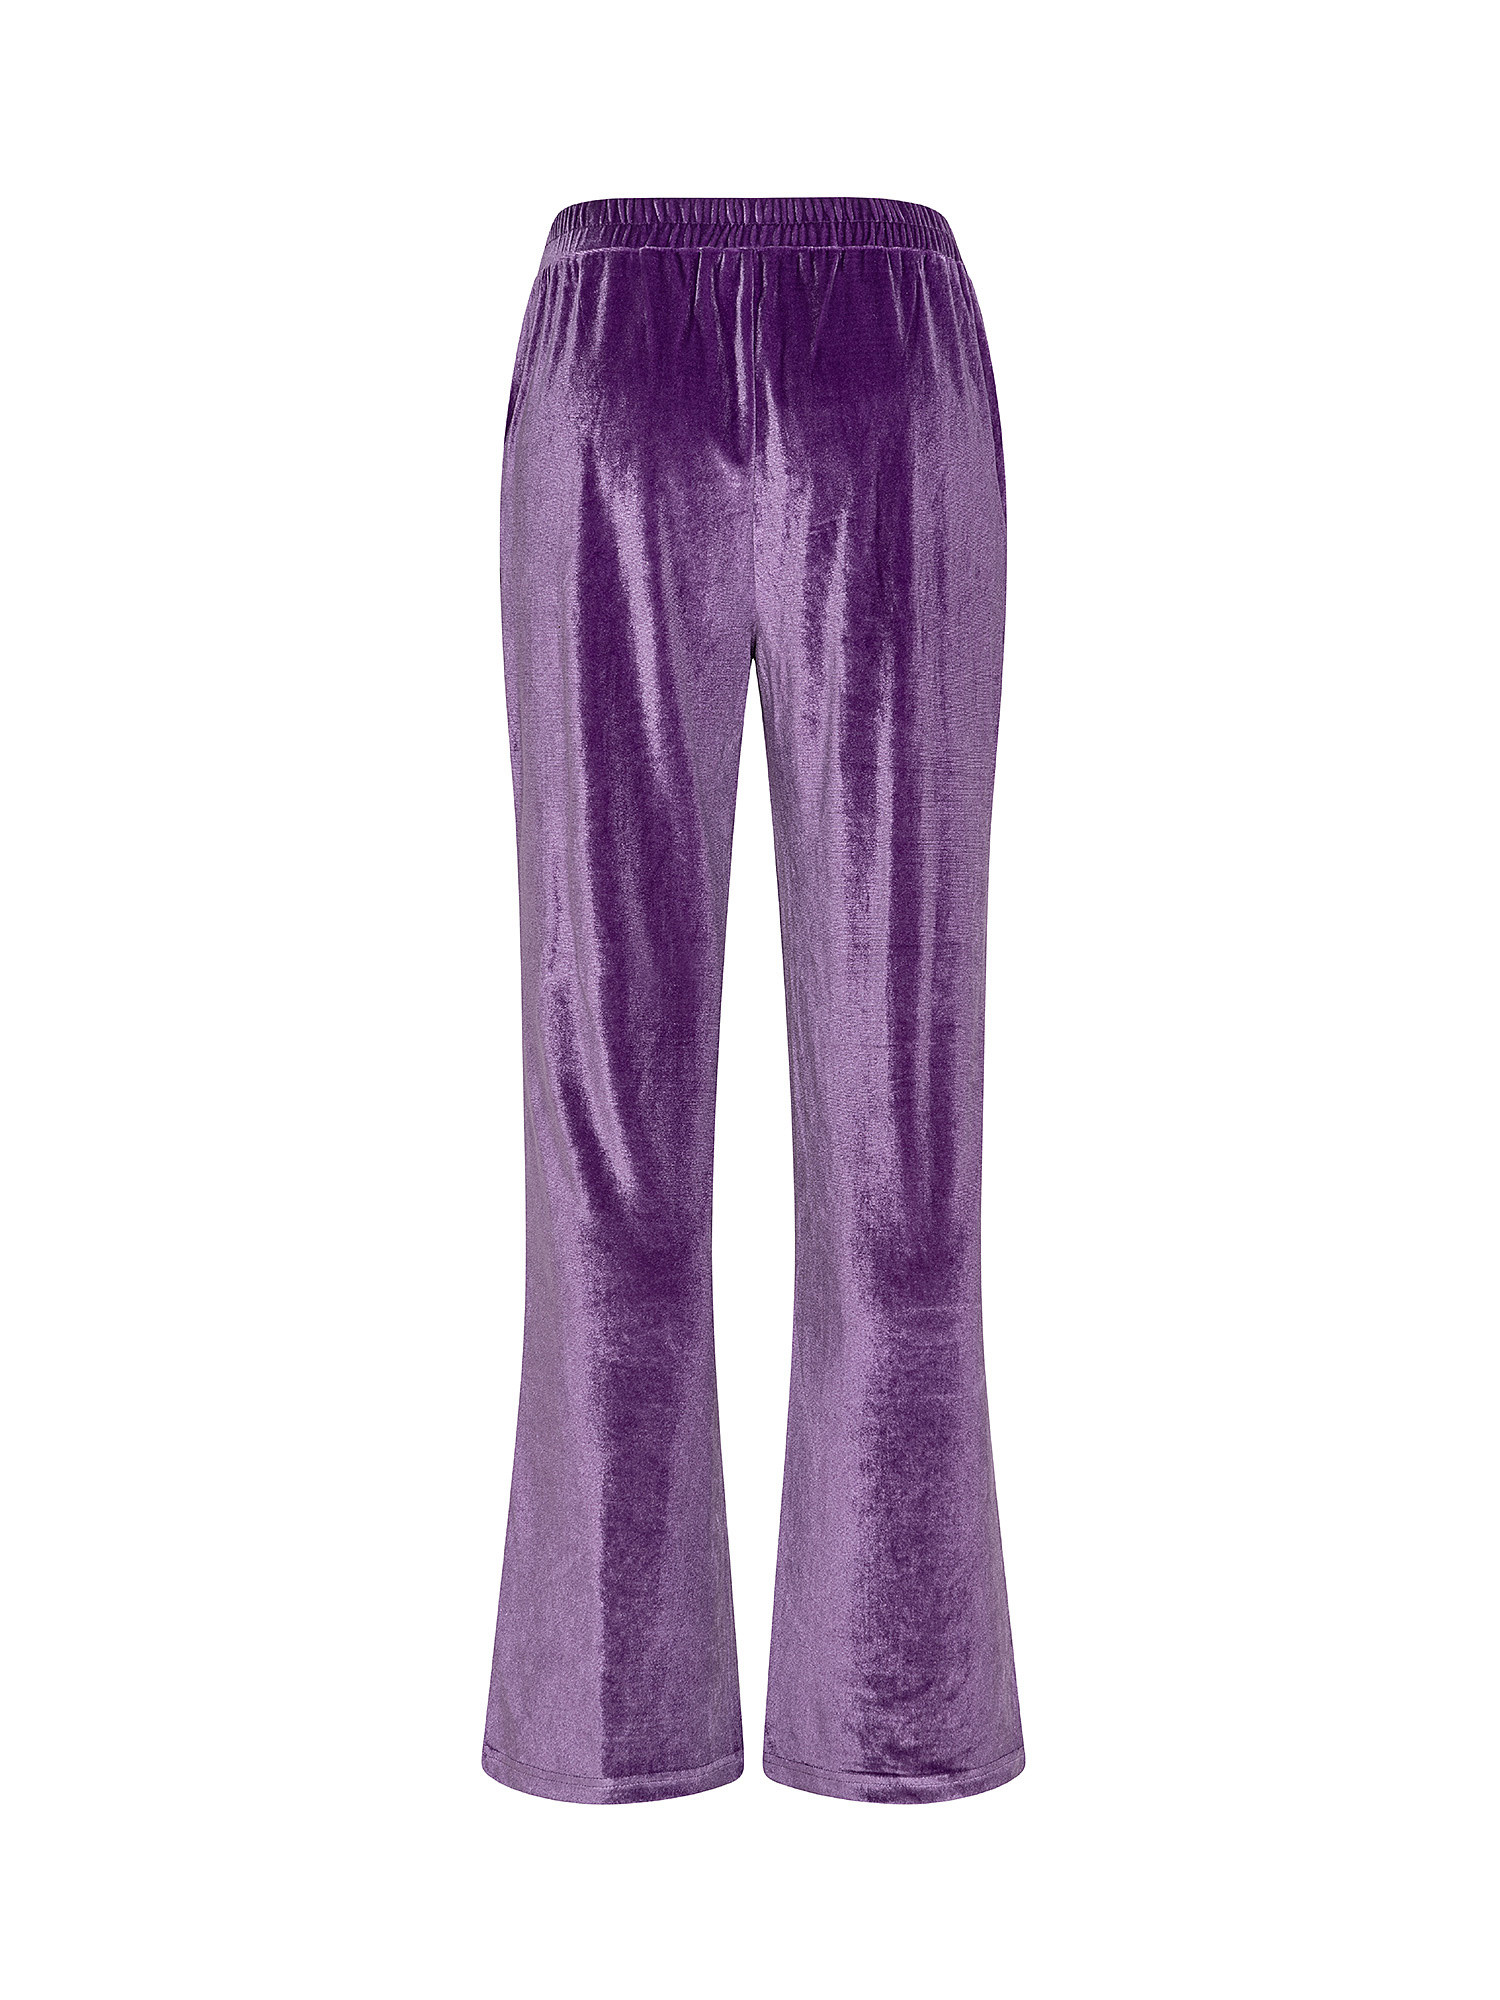 Pantalone in velour, Viola, large image number 1